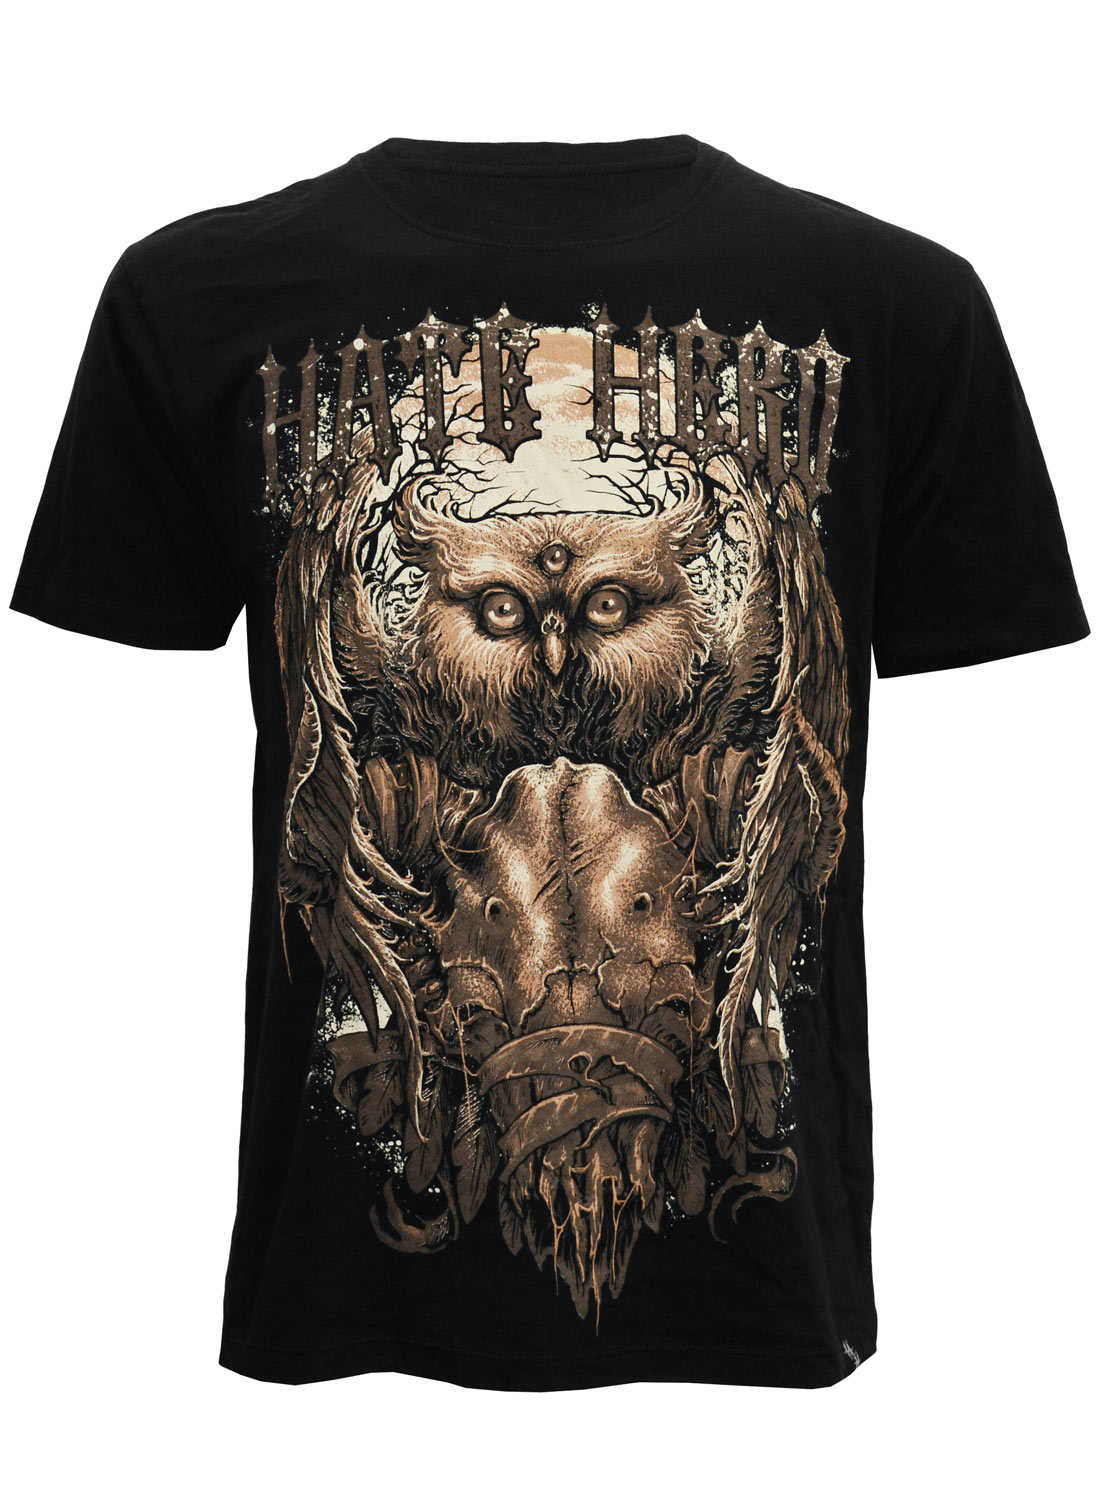 Three Eyed Owl T-shirt